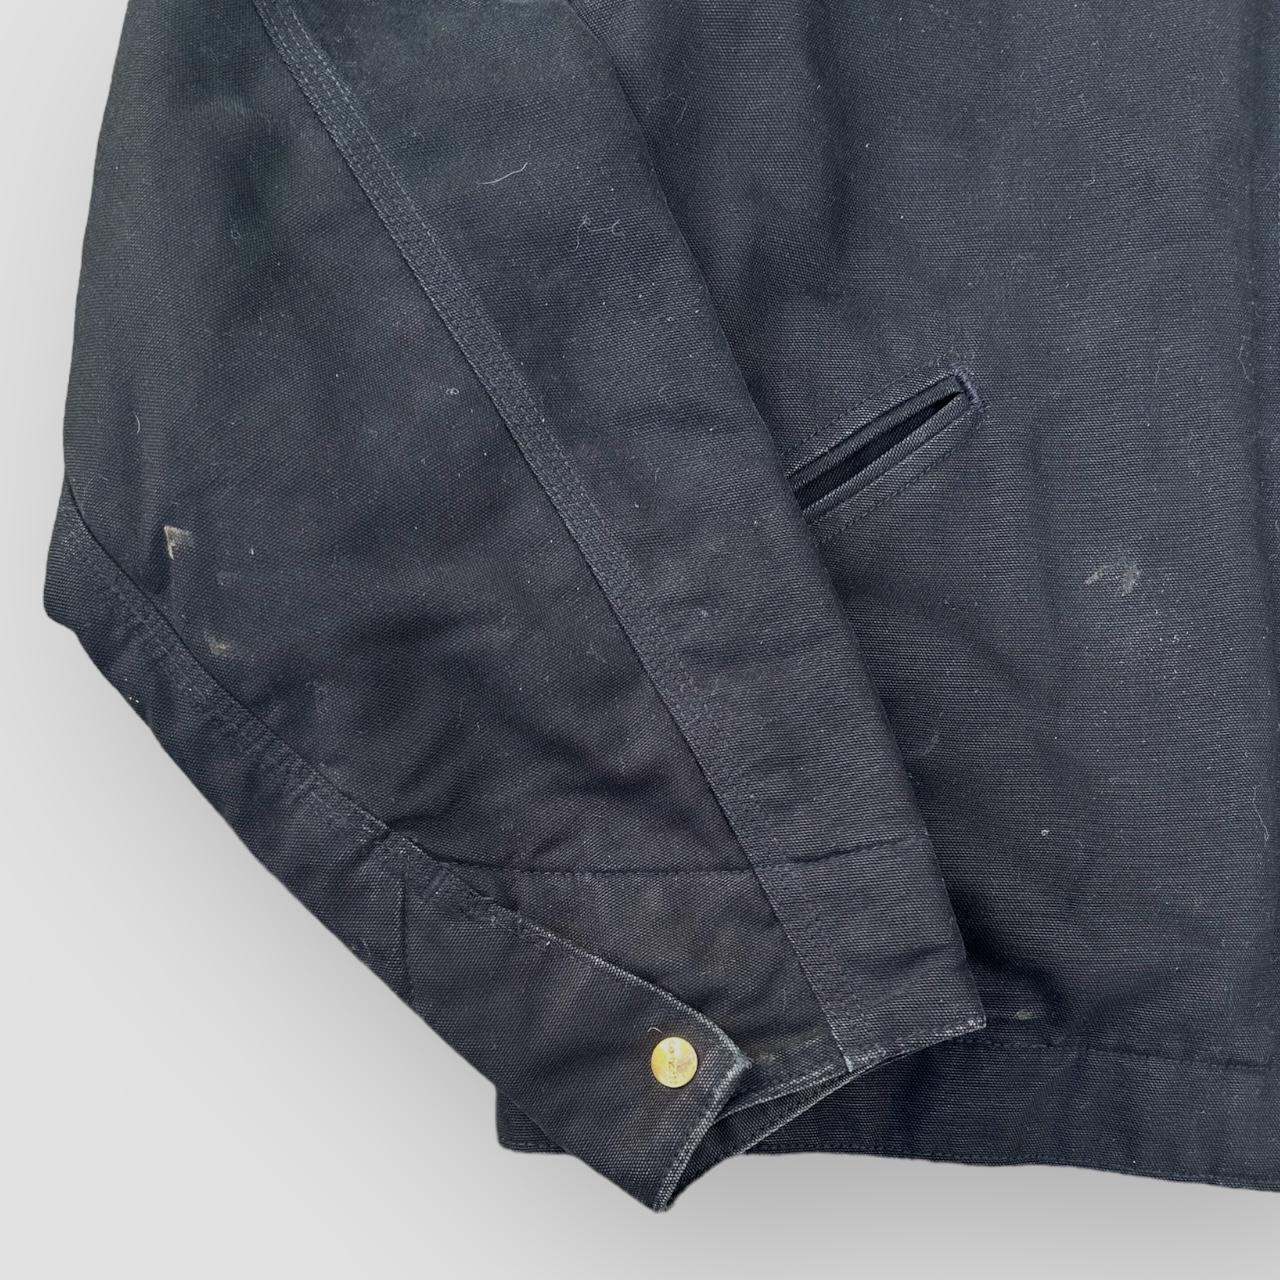 Vintage CARHARTT DETROIT Jacket Black with brown... - Depop